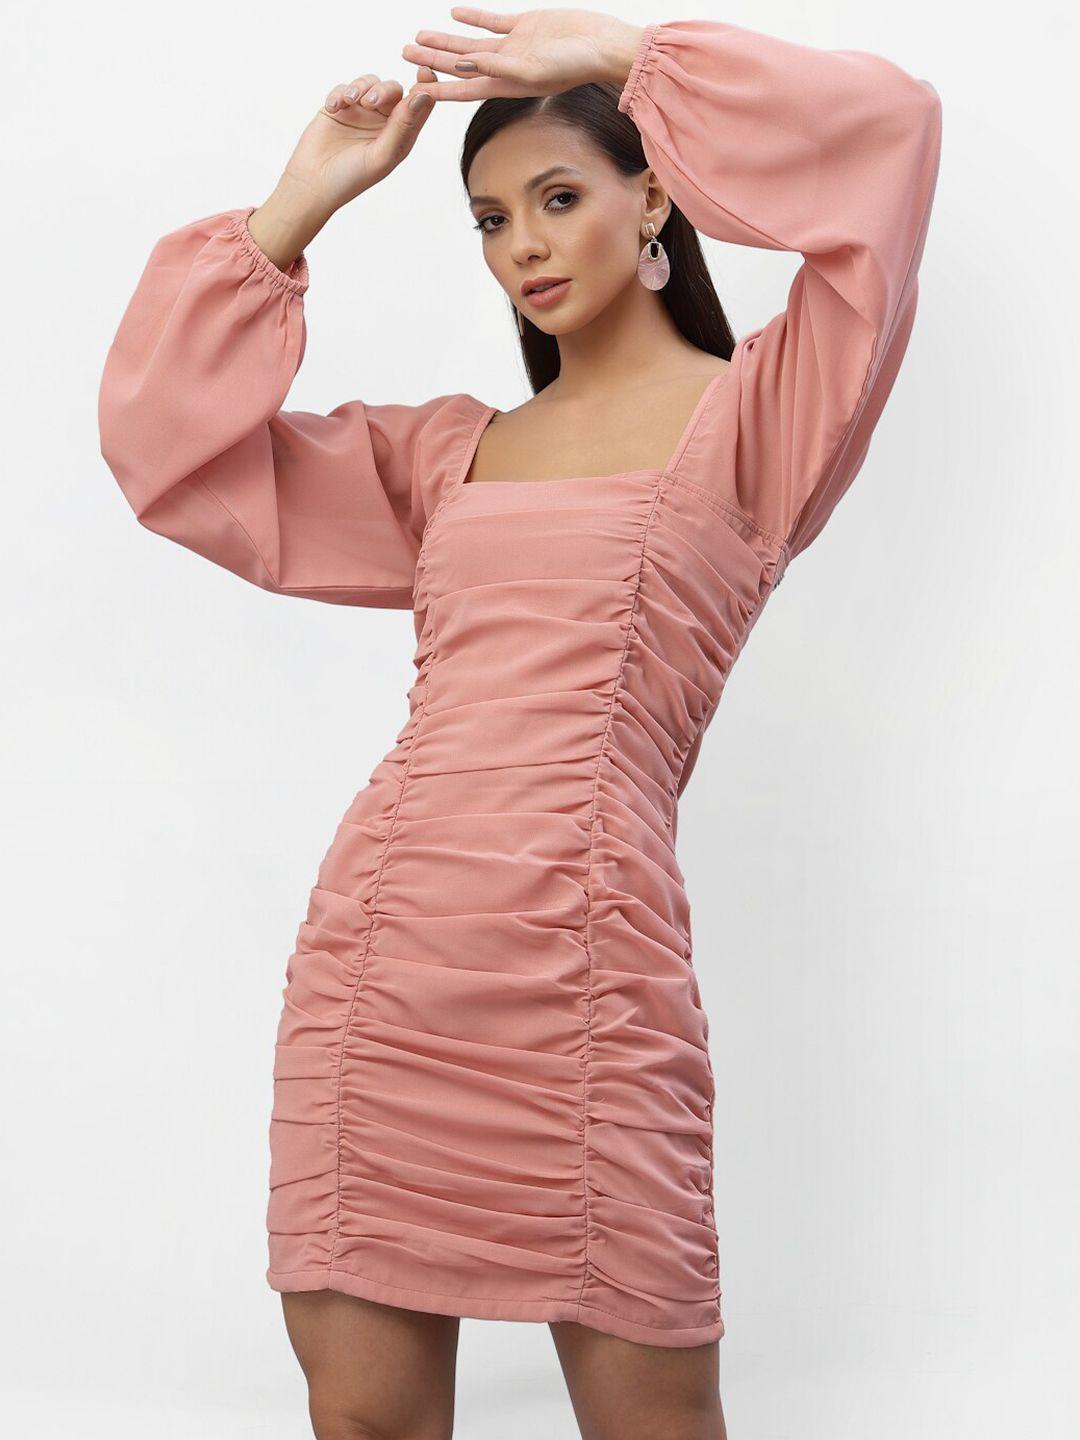 aayu women peach-coloured georgette sheath dress